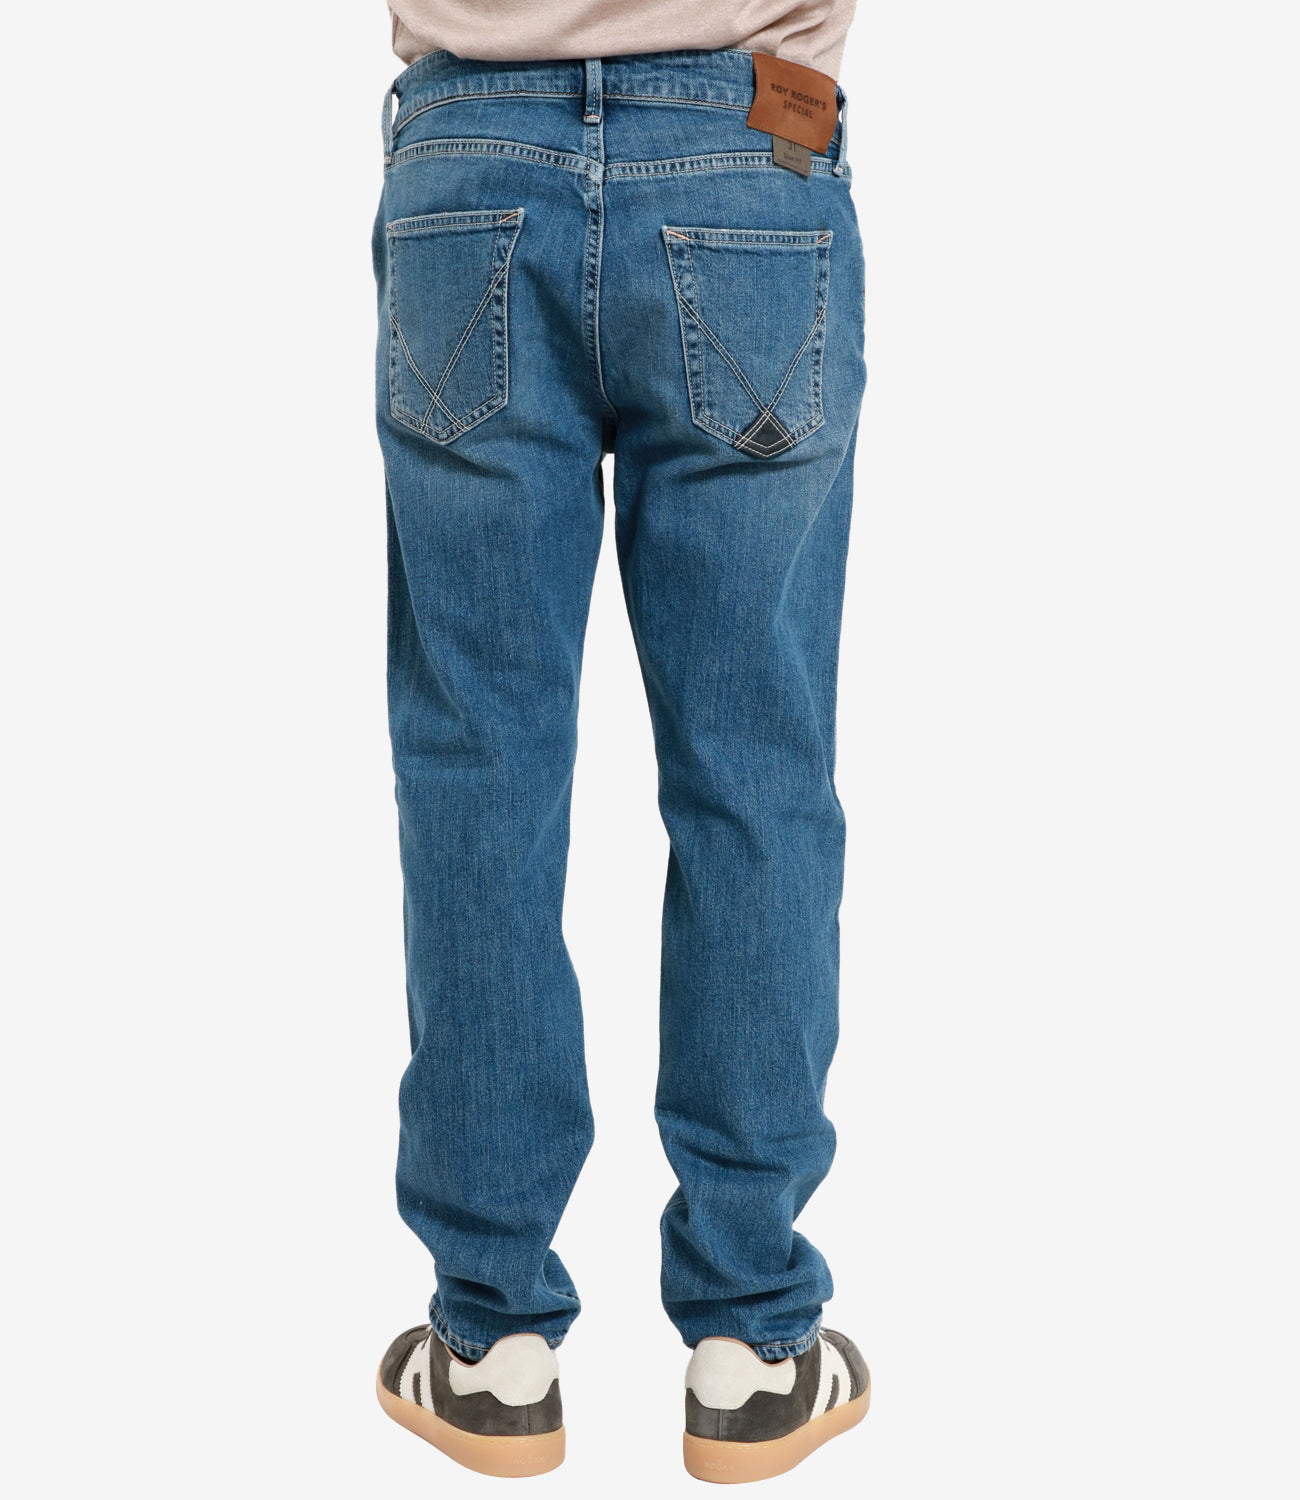 Roy Roger's | Jeans 527 Blu Chiaro